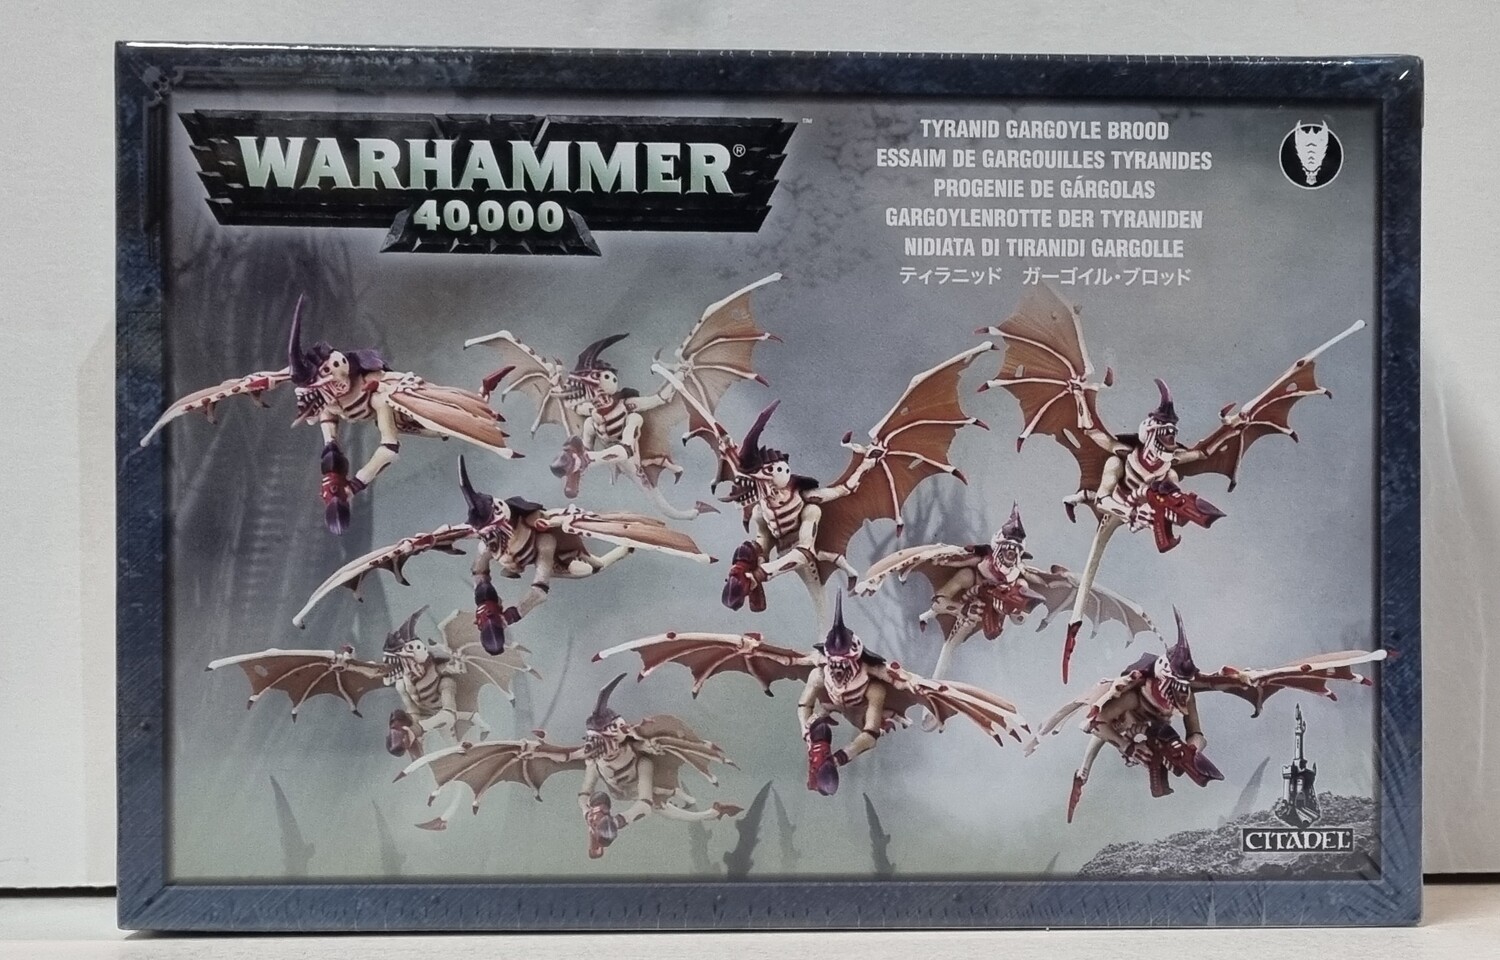 Warhammer, 40k, 51-12, Tyranid Gargoyle Brood